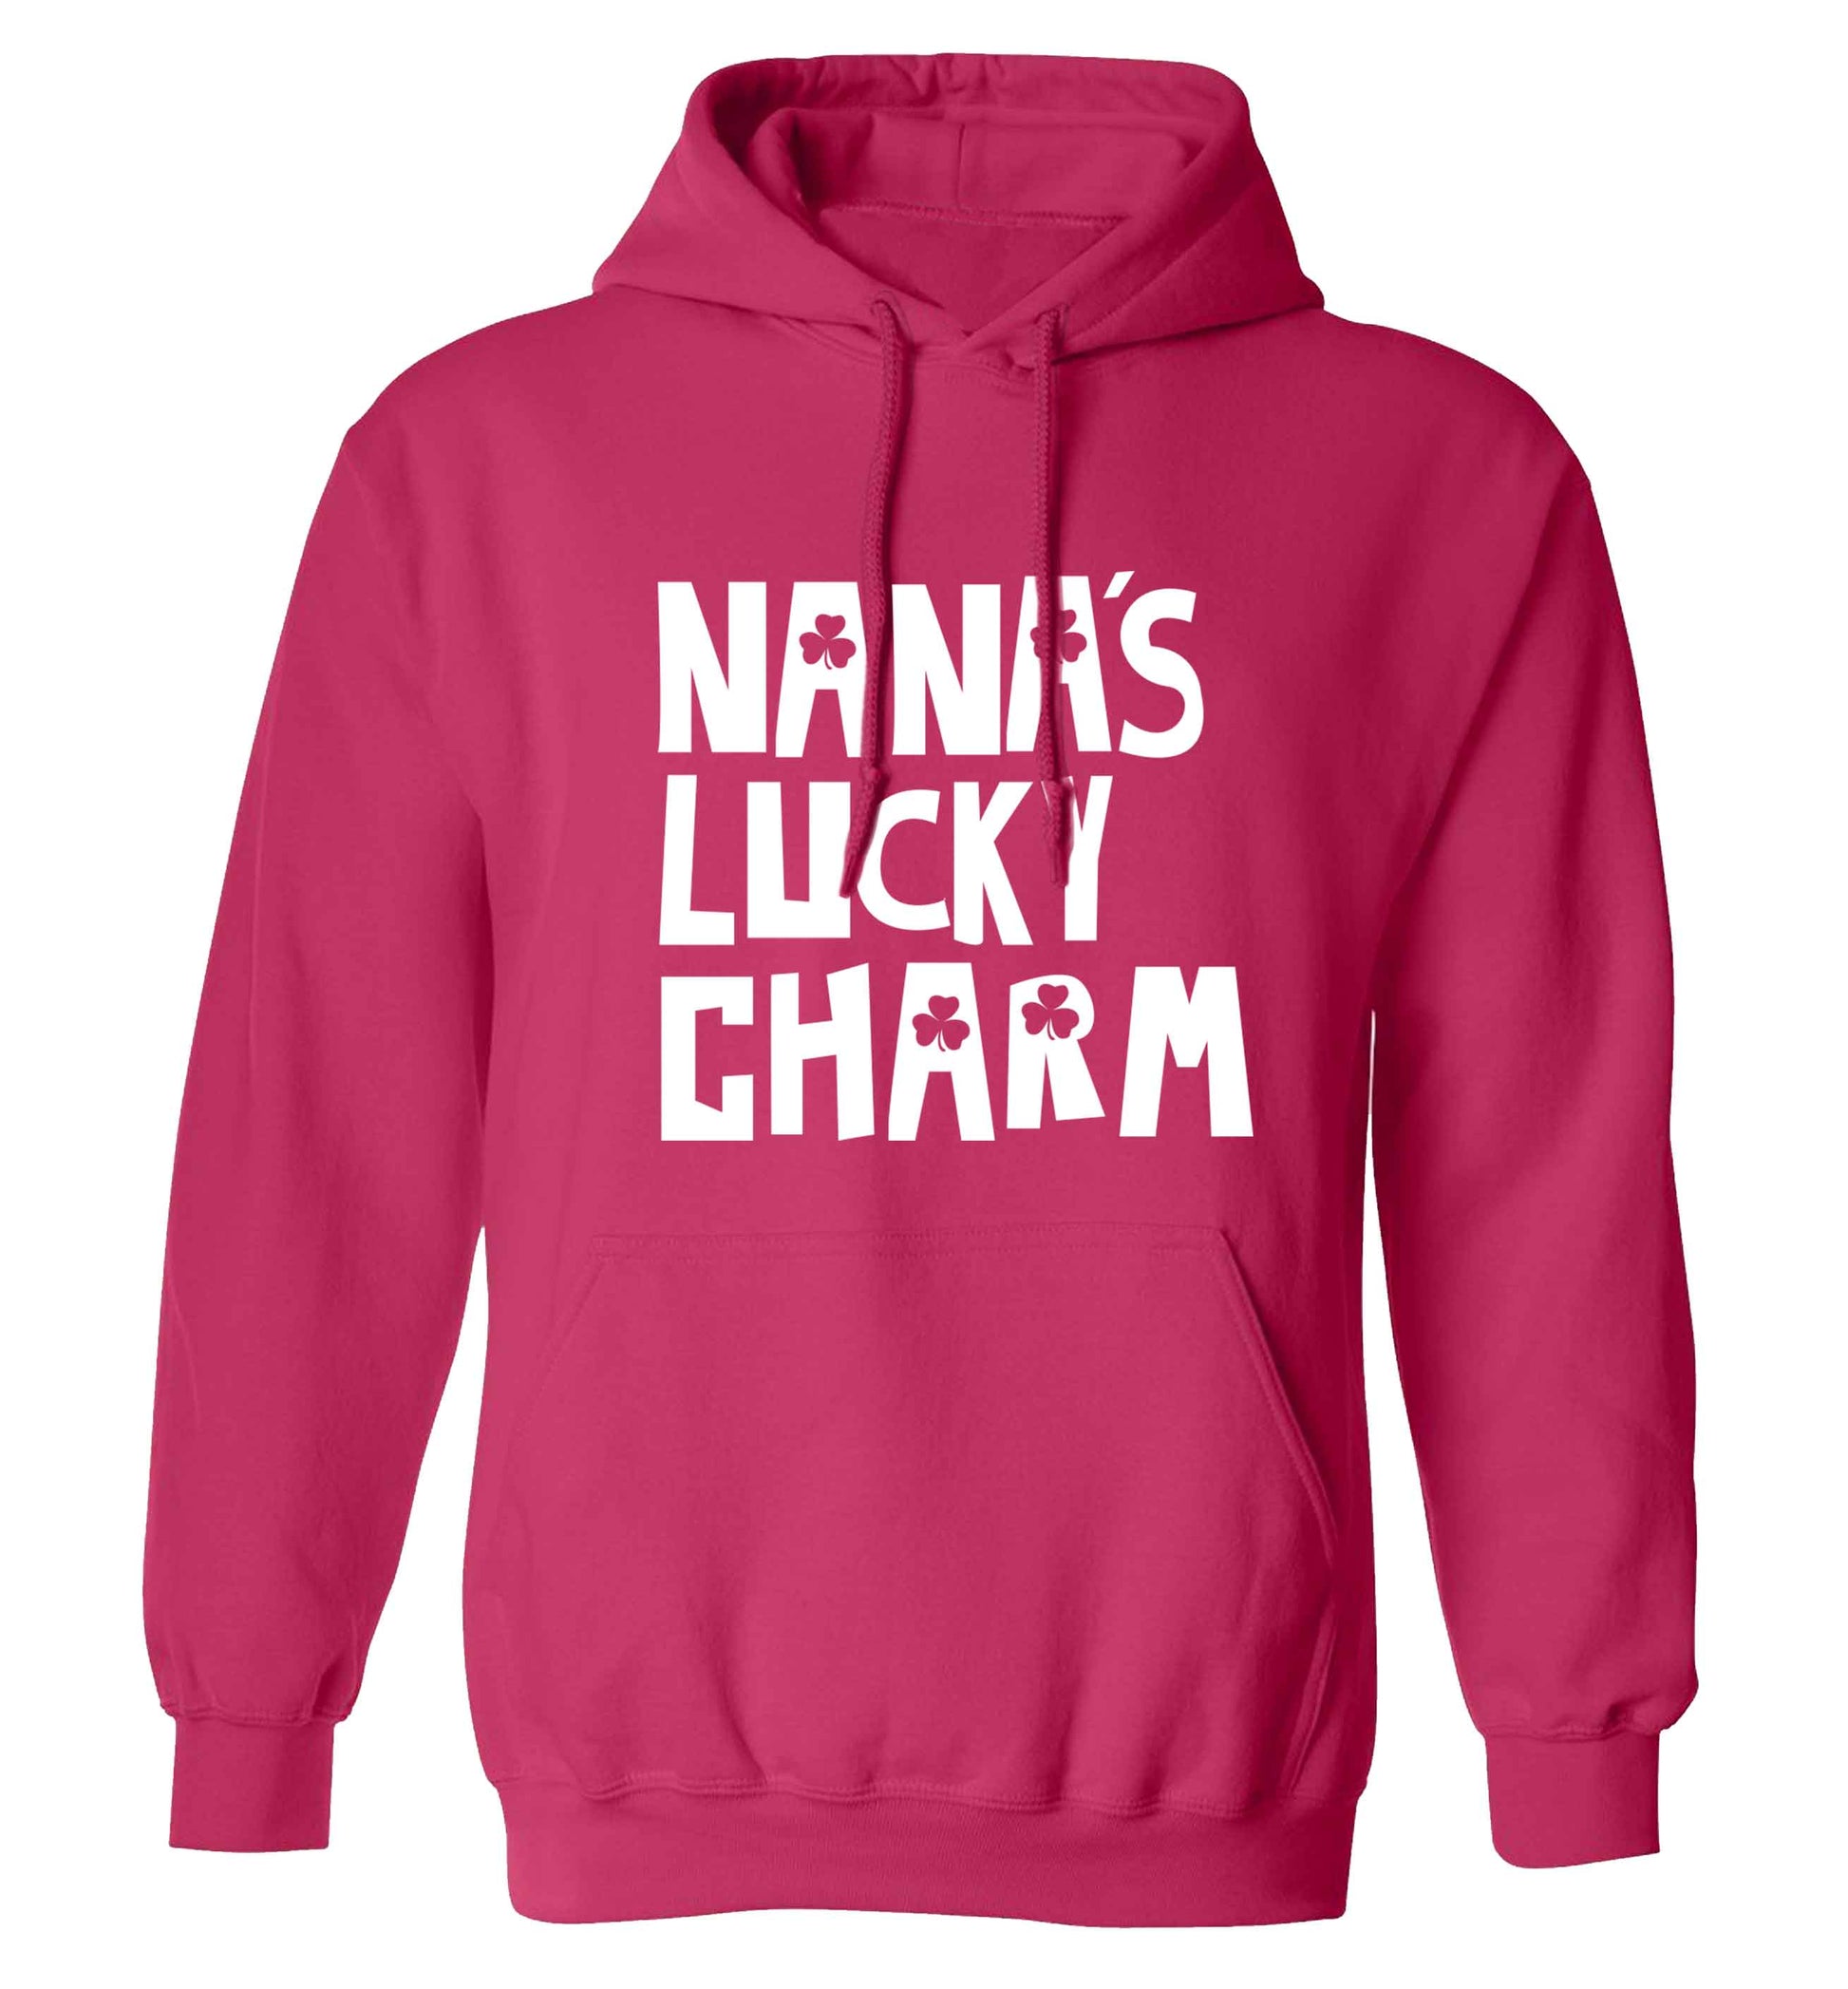 Nana's lucky charm adults unisex pink hoodie 2XL